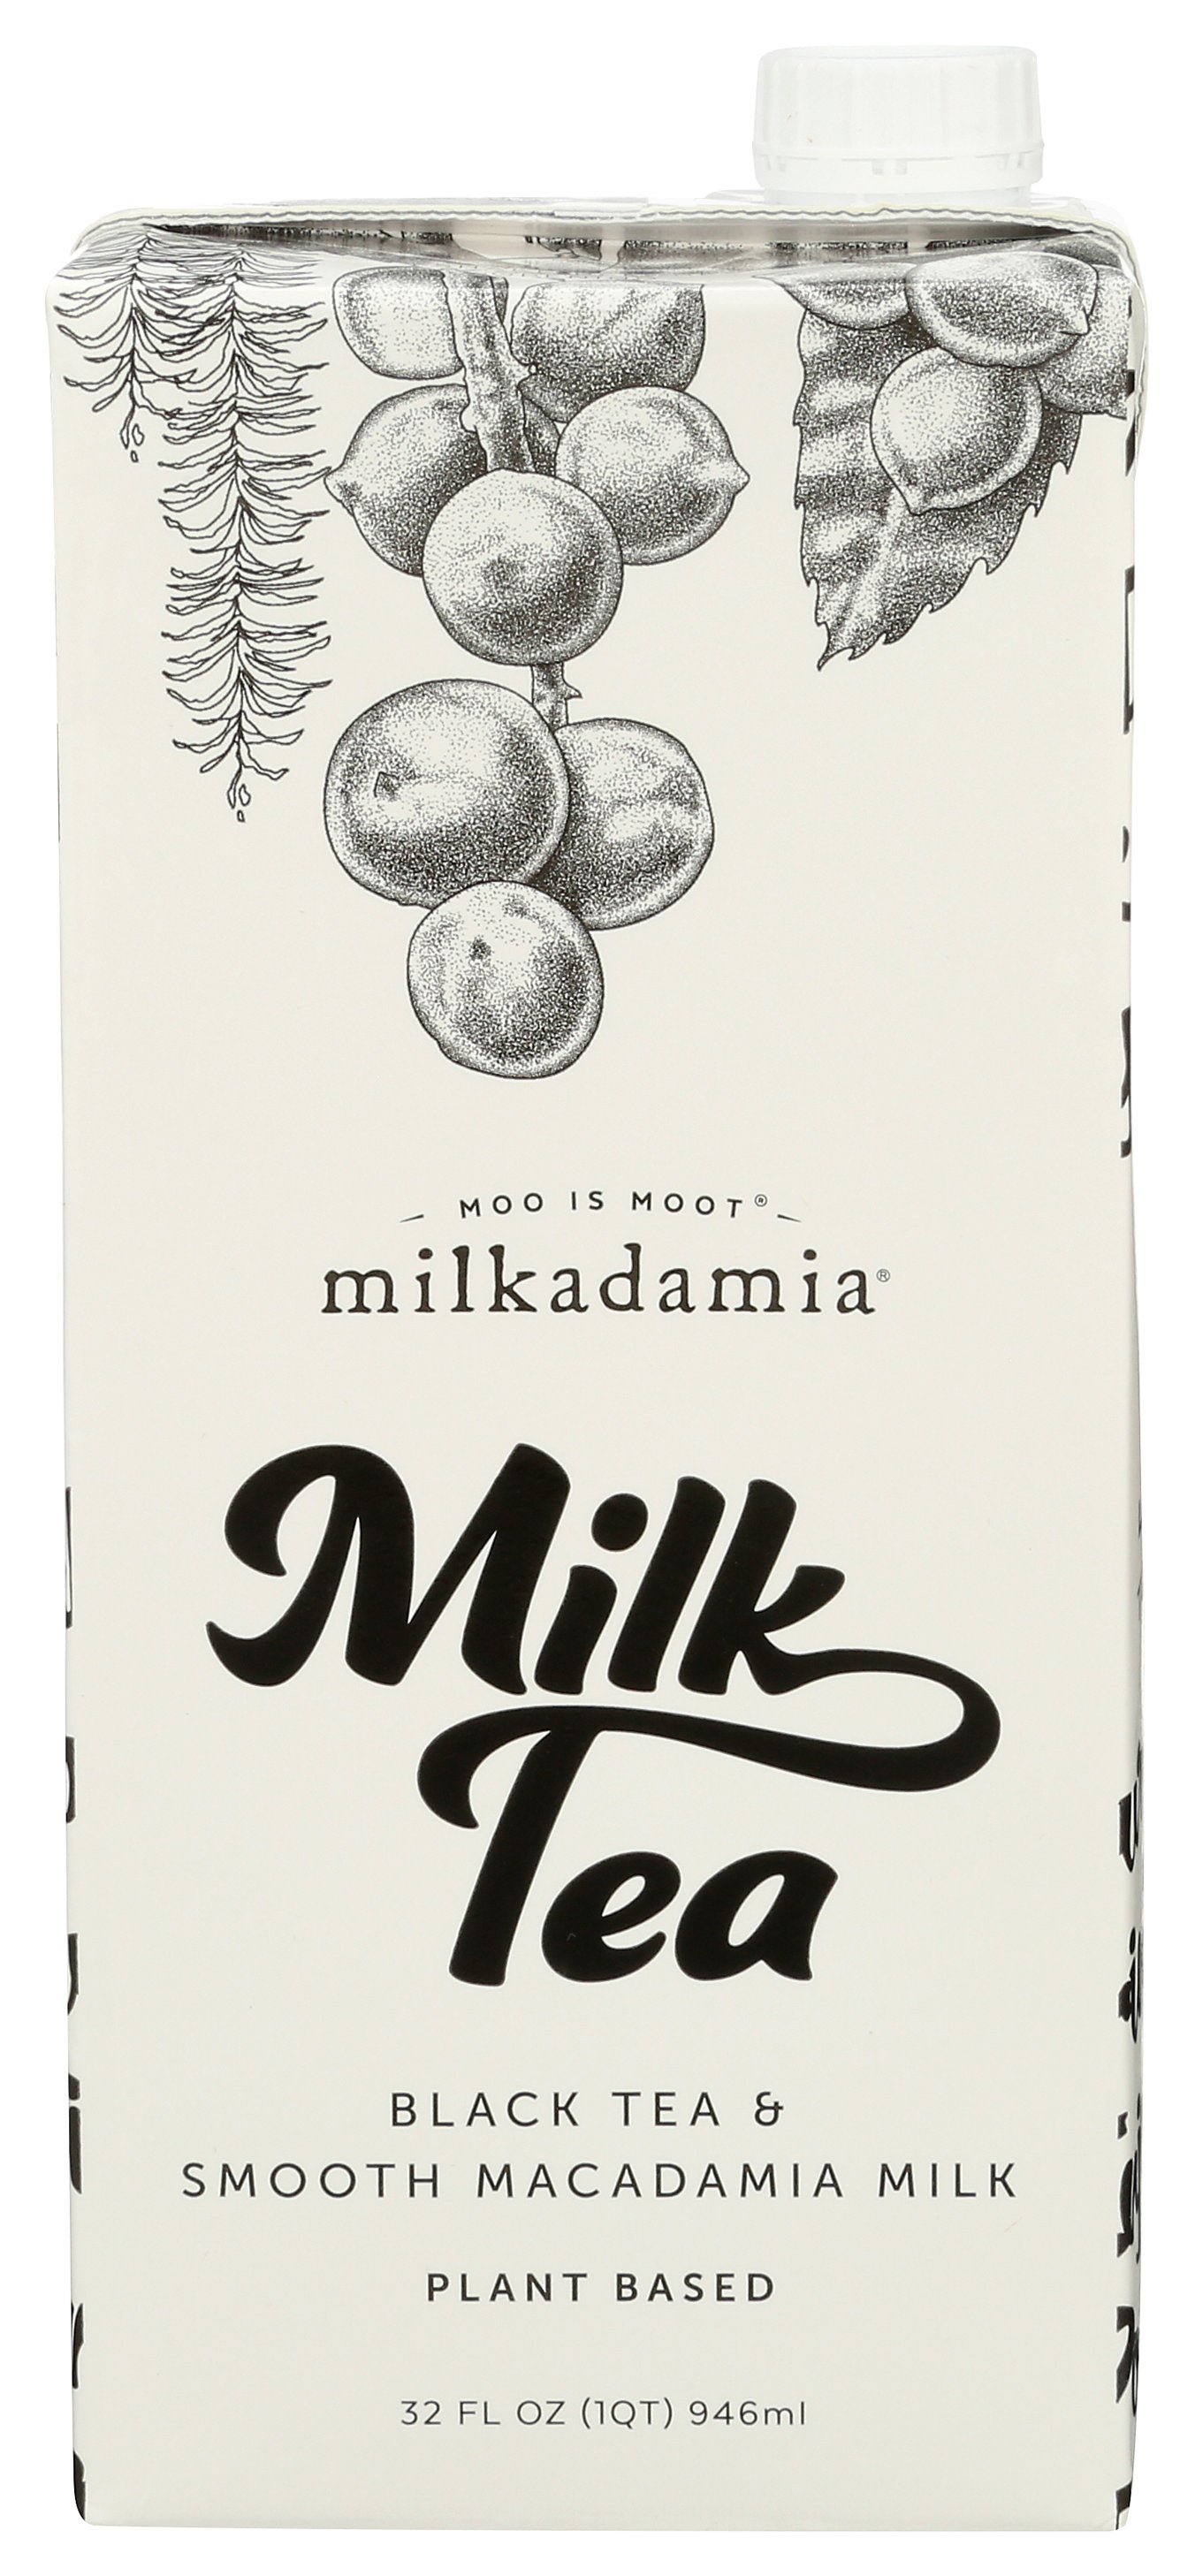 MILKADAMIA MILK TEA - Case of 6